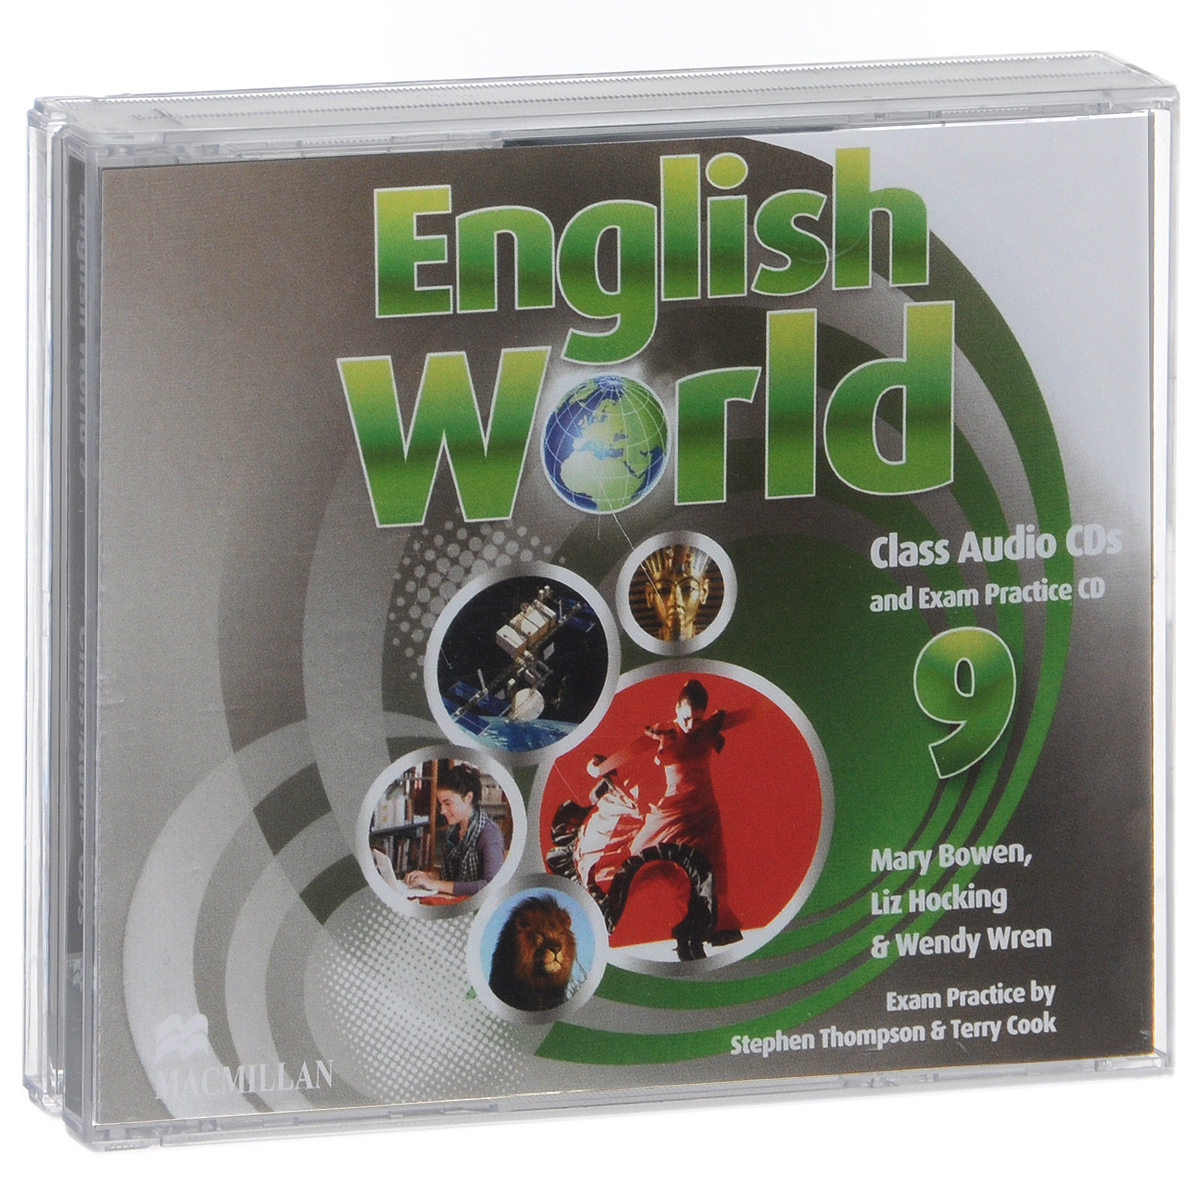 English World 9: Class Audio CDs and Exam Practice CD (аудиокурс на 3 CD)